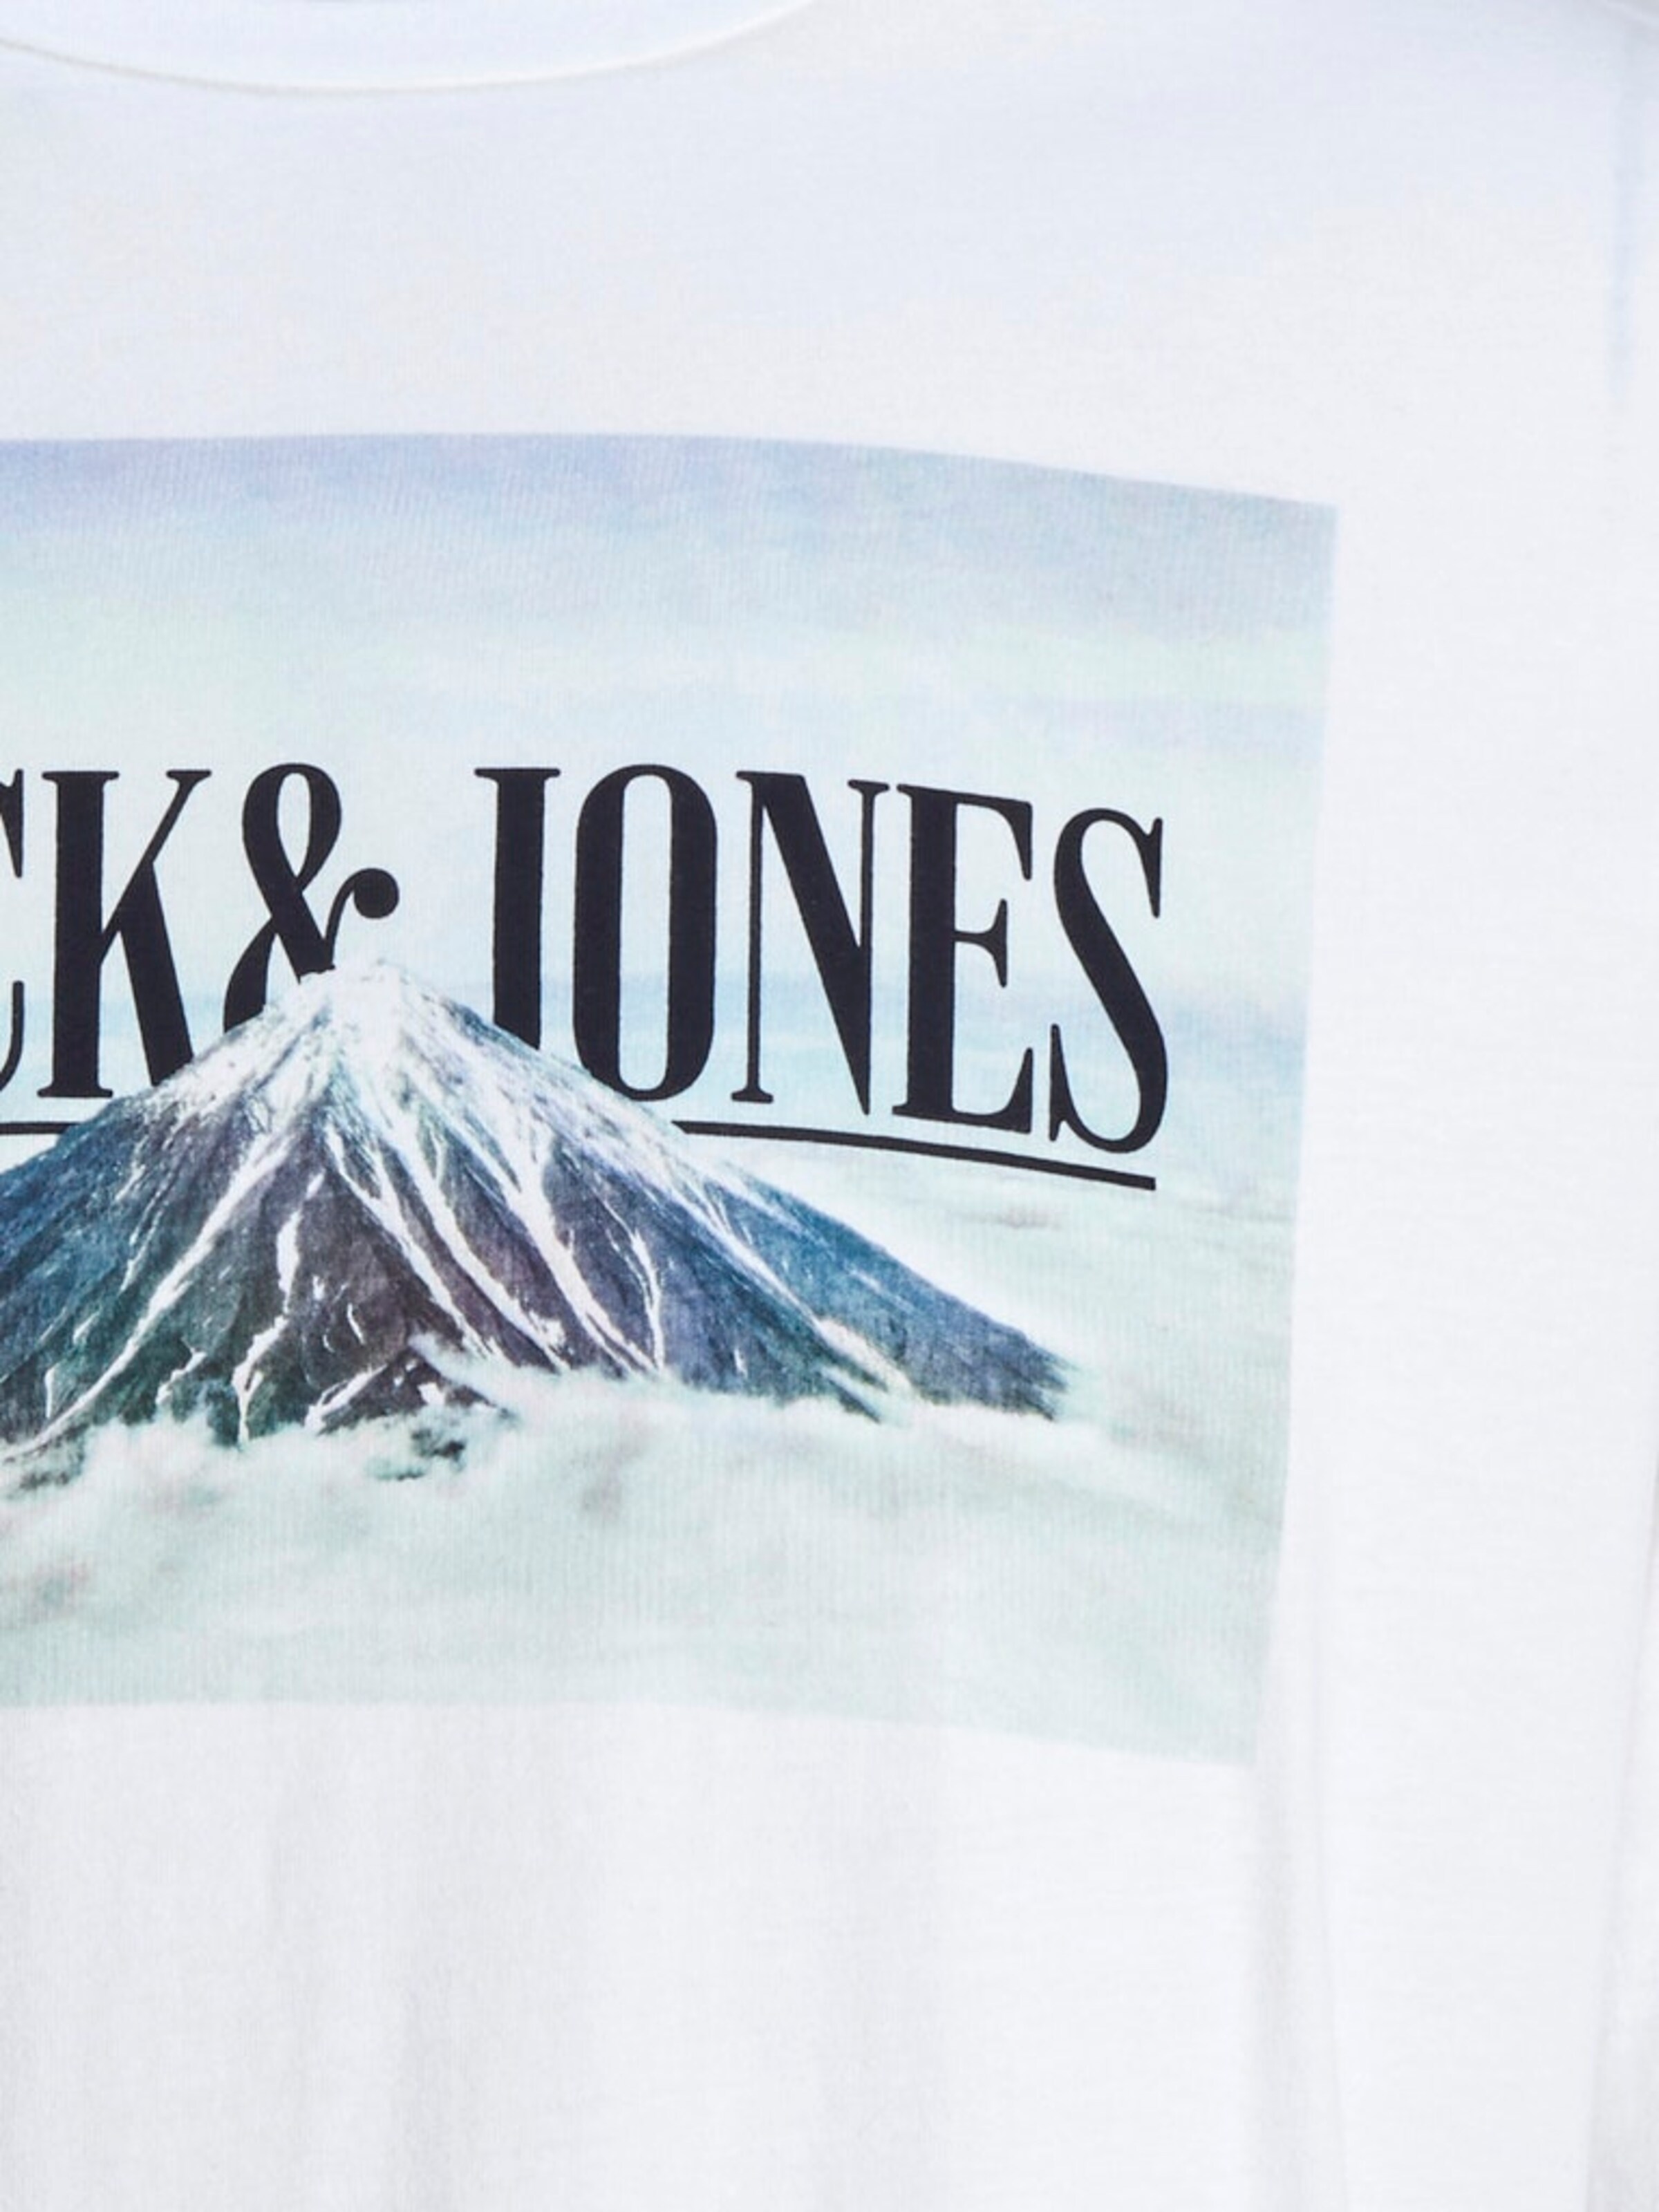 Männer Shirts JACK & JONES Shirt in Weiß - DV01307